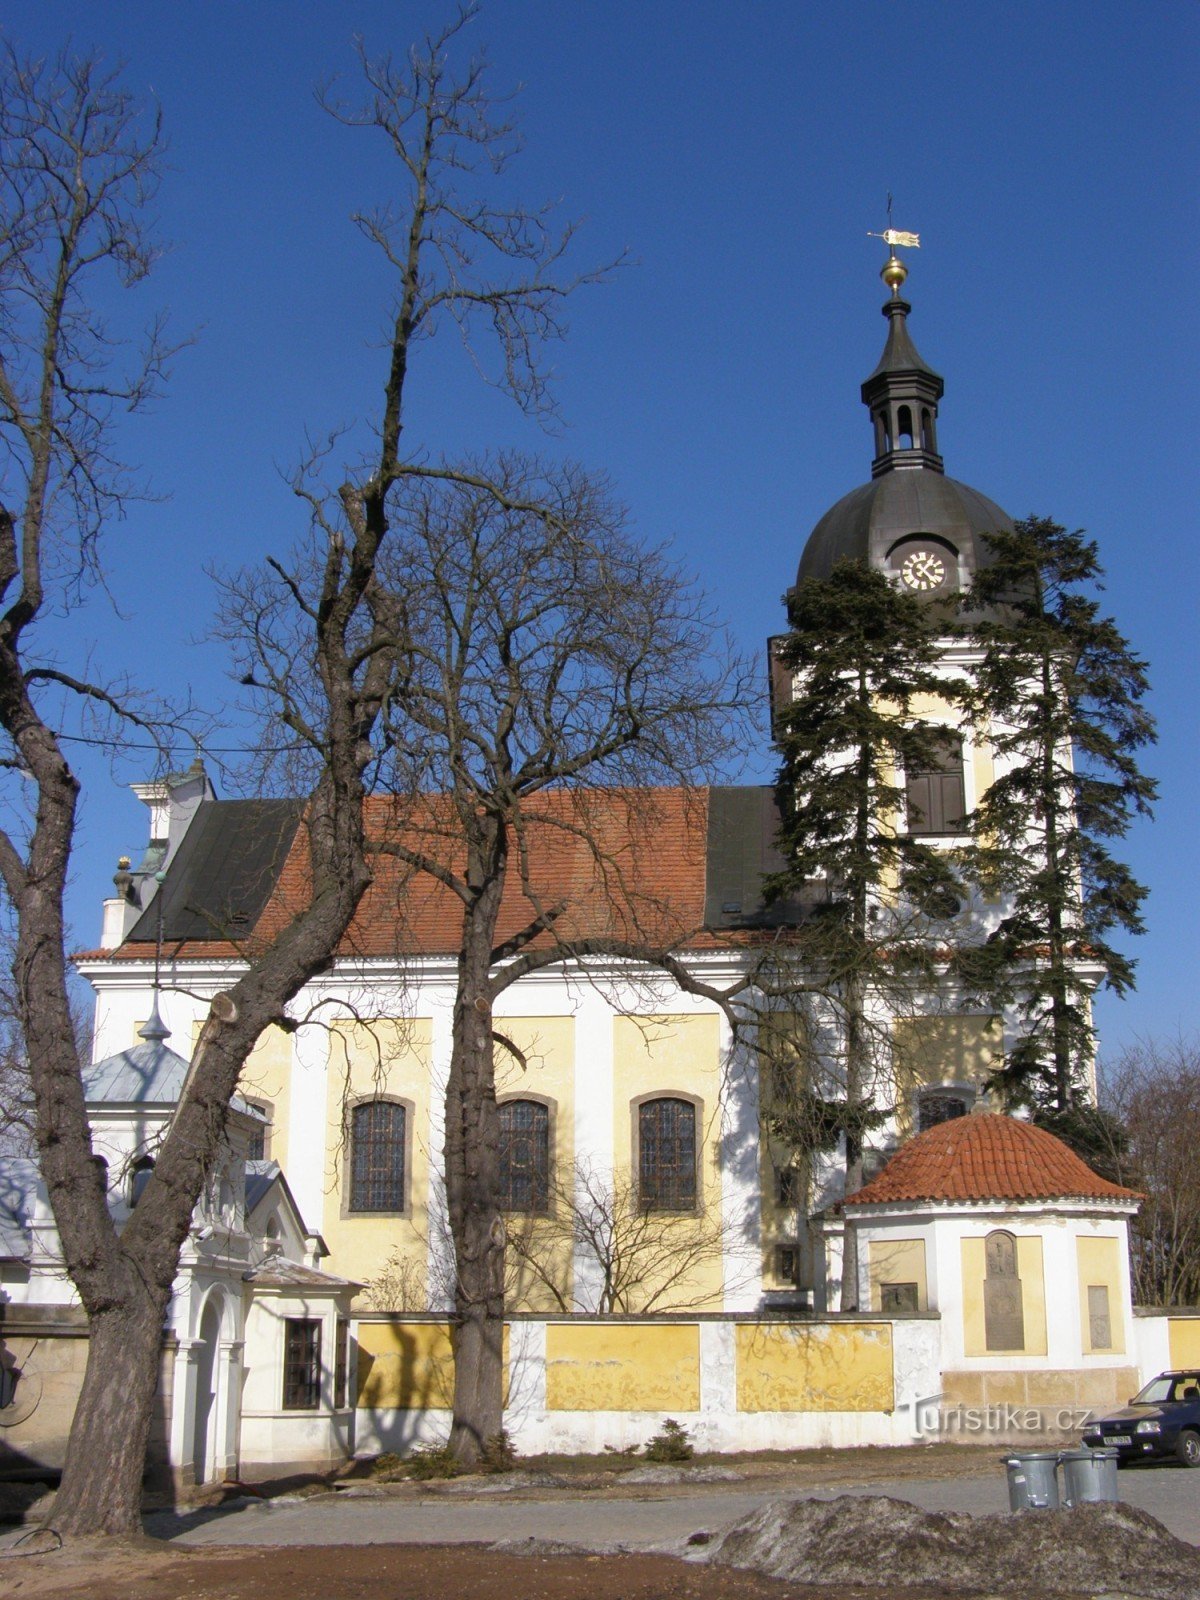 Dobřenice - biserica Sf. Kliment